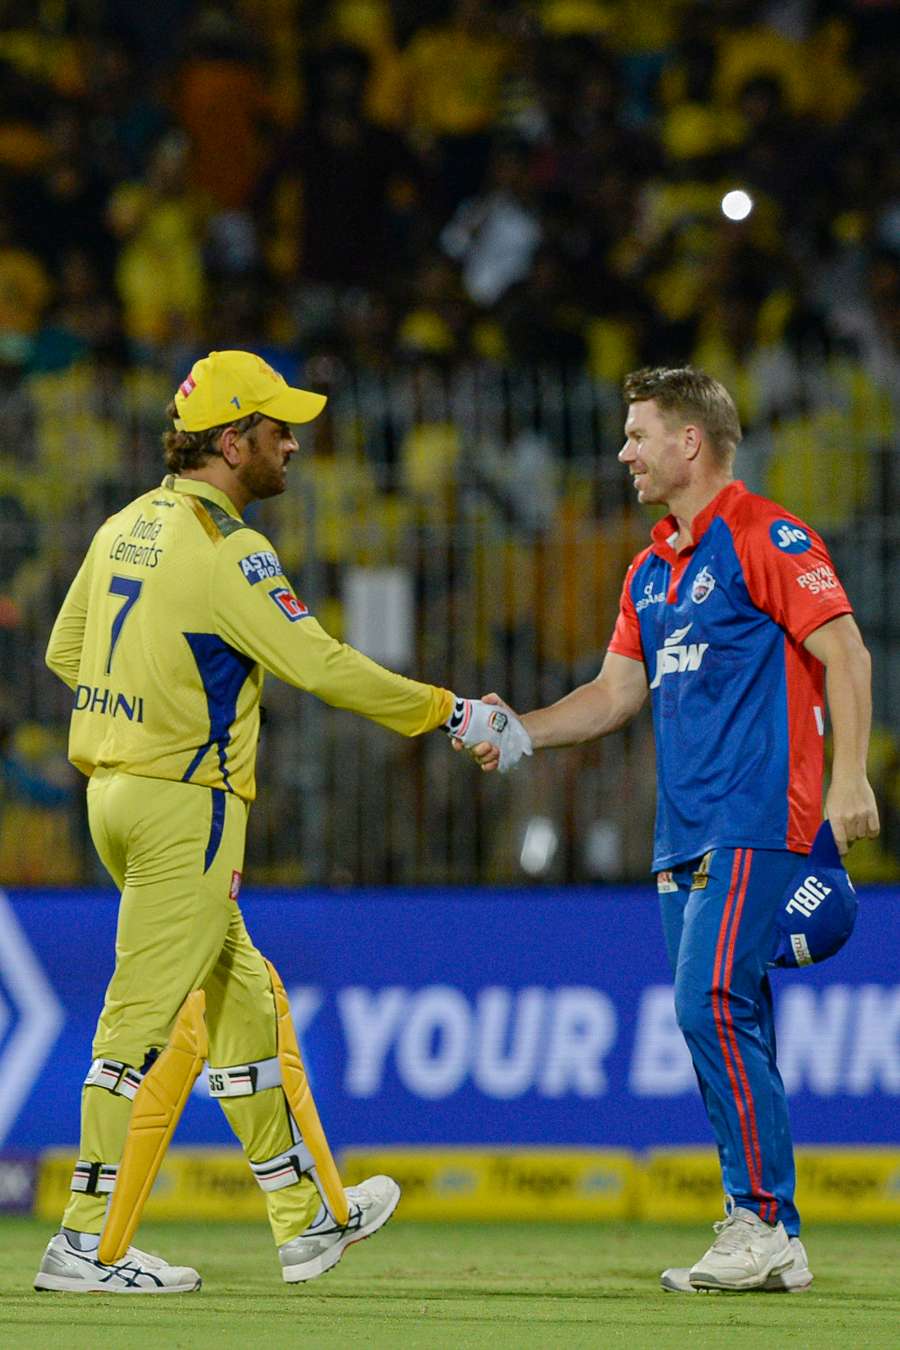 Chennai Super Kings' Mahendra Singh Dhoni (L) shakes hands with Delhi Capitals' David Warner at the end of the match